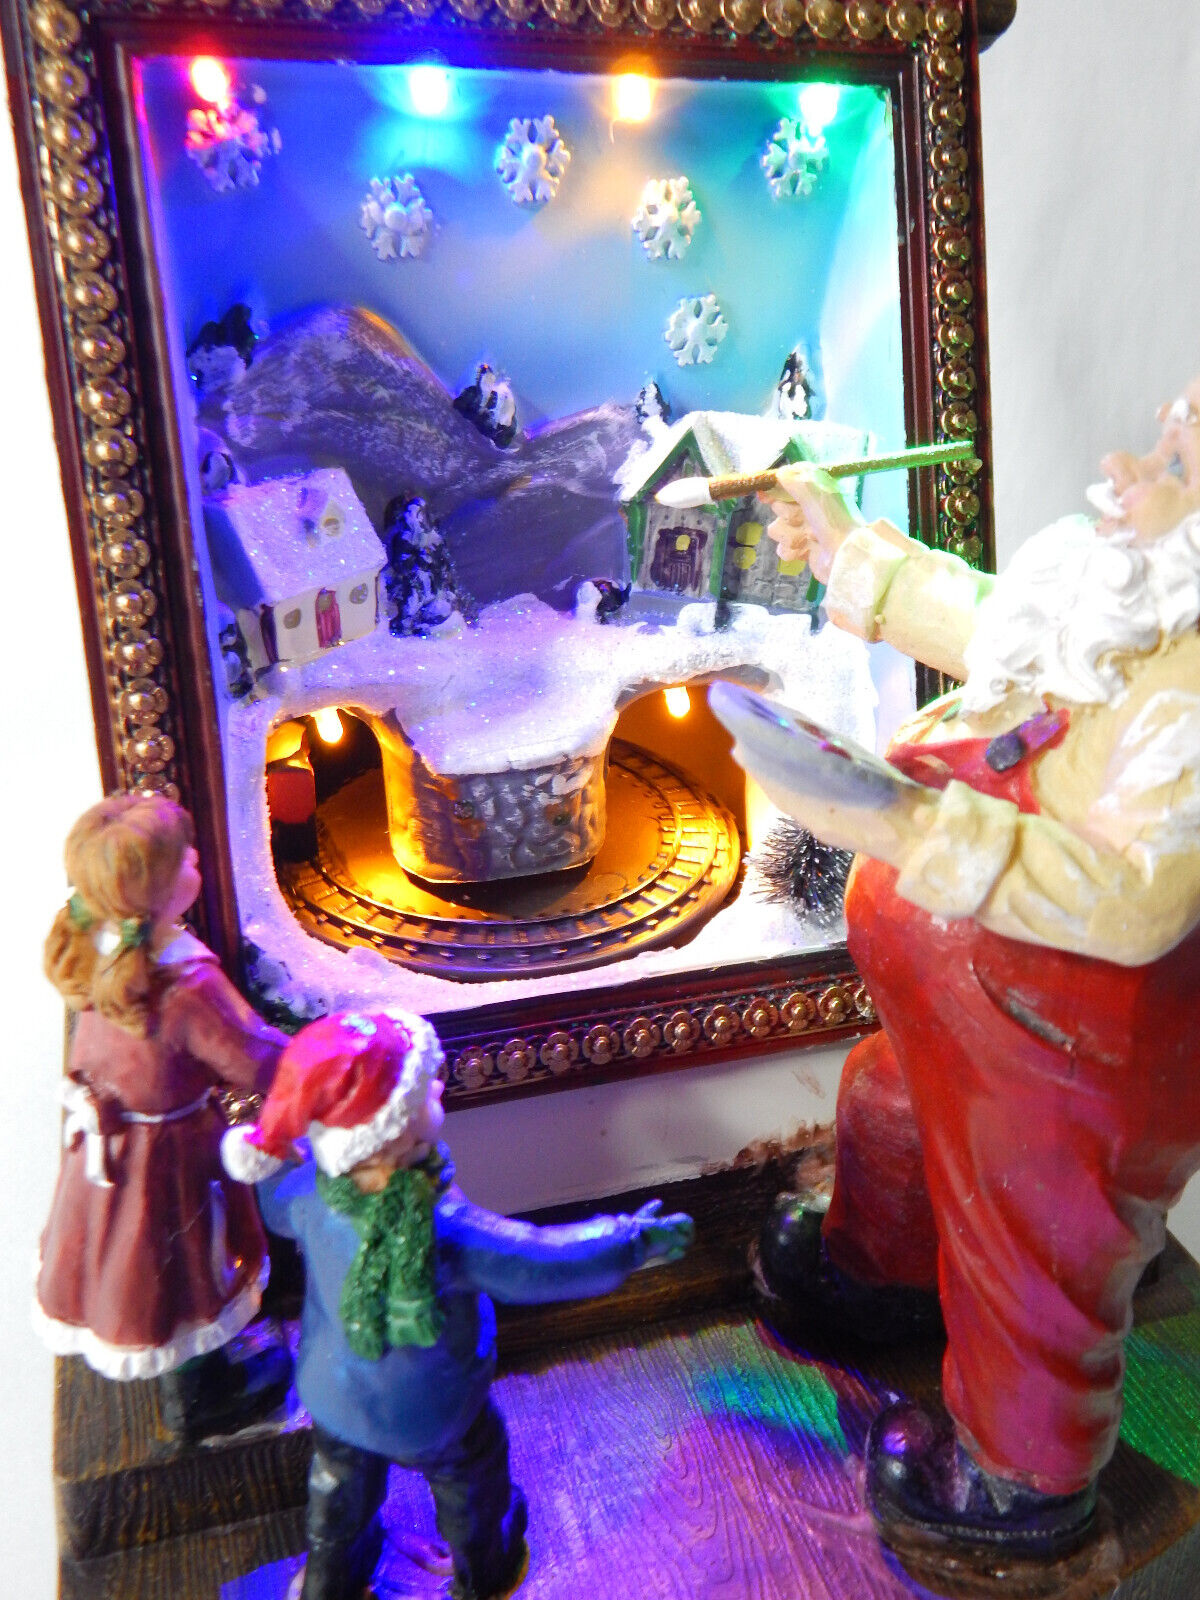 VTG AVON WINTER SCENE PAINTED BY SANTA ANIMATED TRAIN CHRISTMAS HOLIDAY DECOR